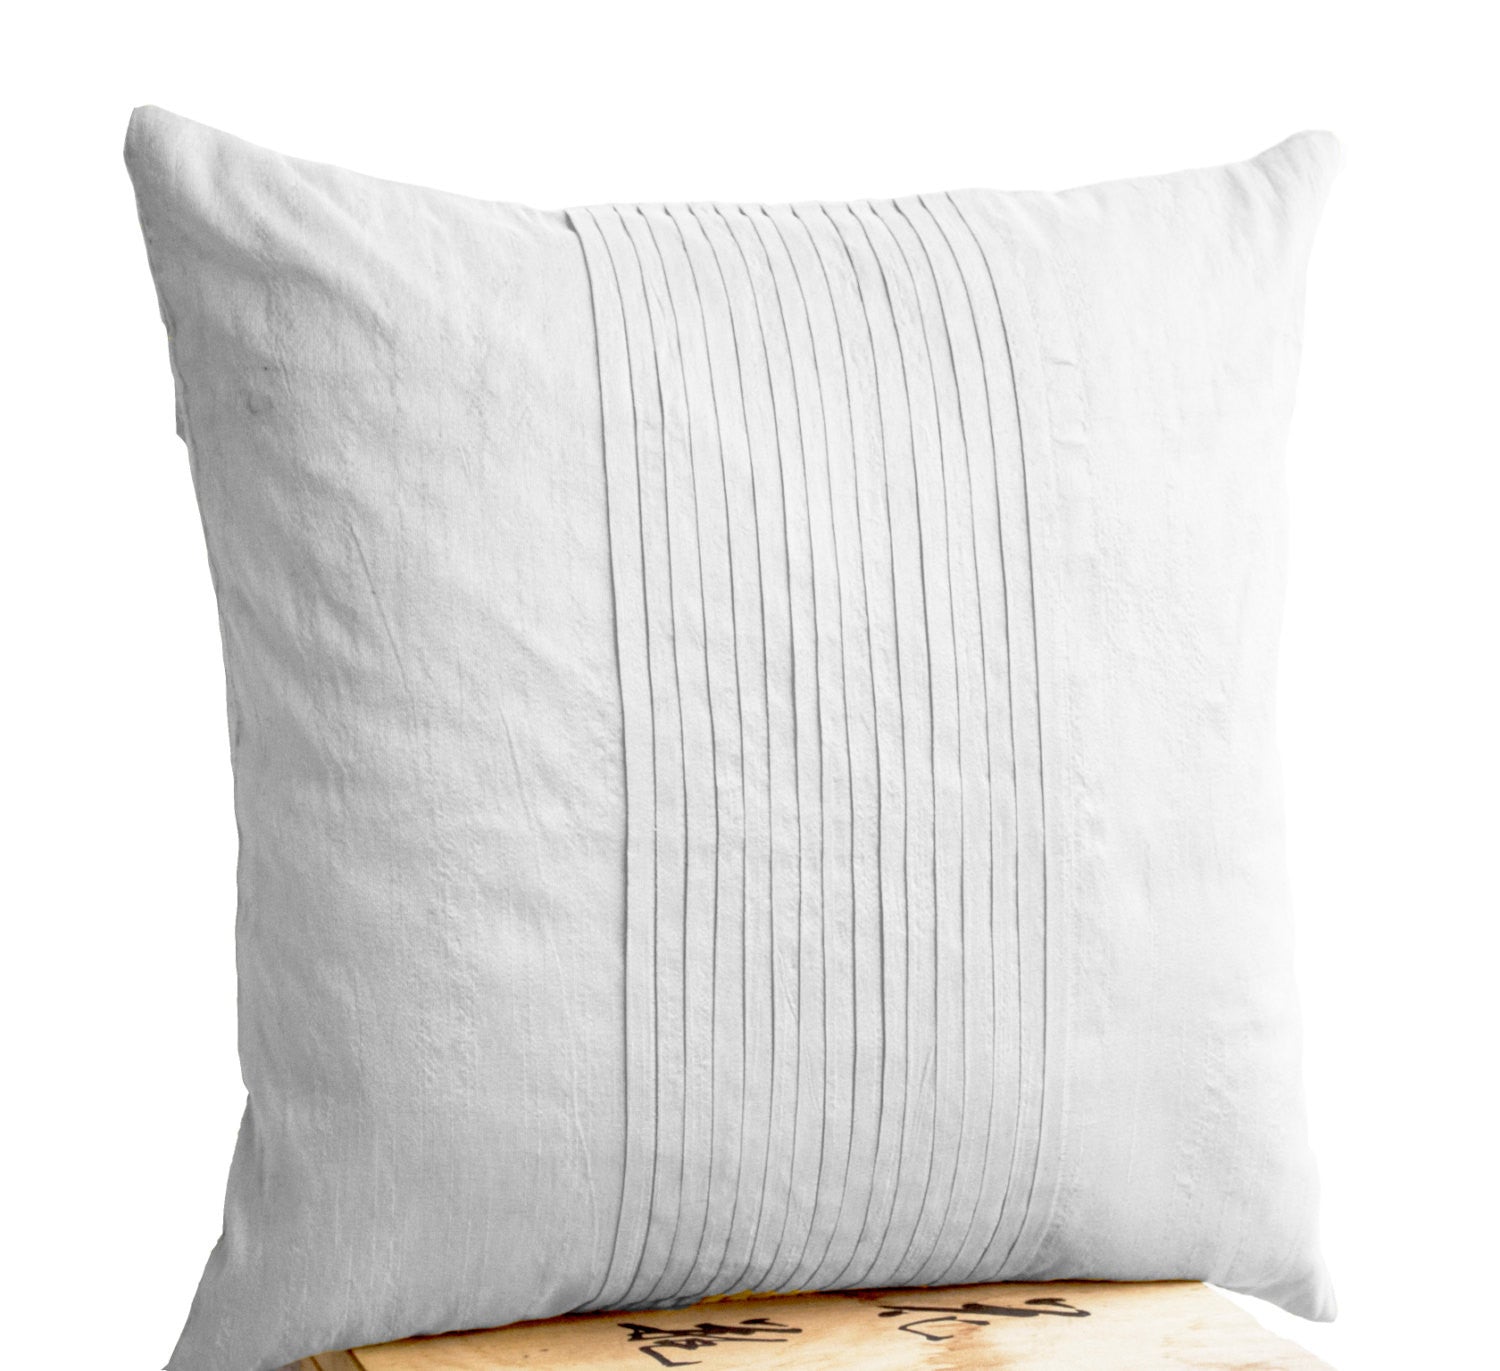 The Soft White Pintuck Throw Pillow